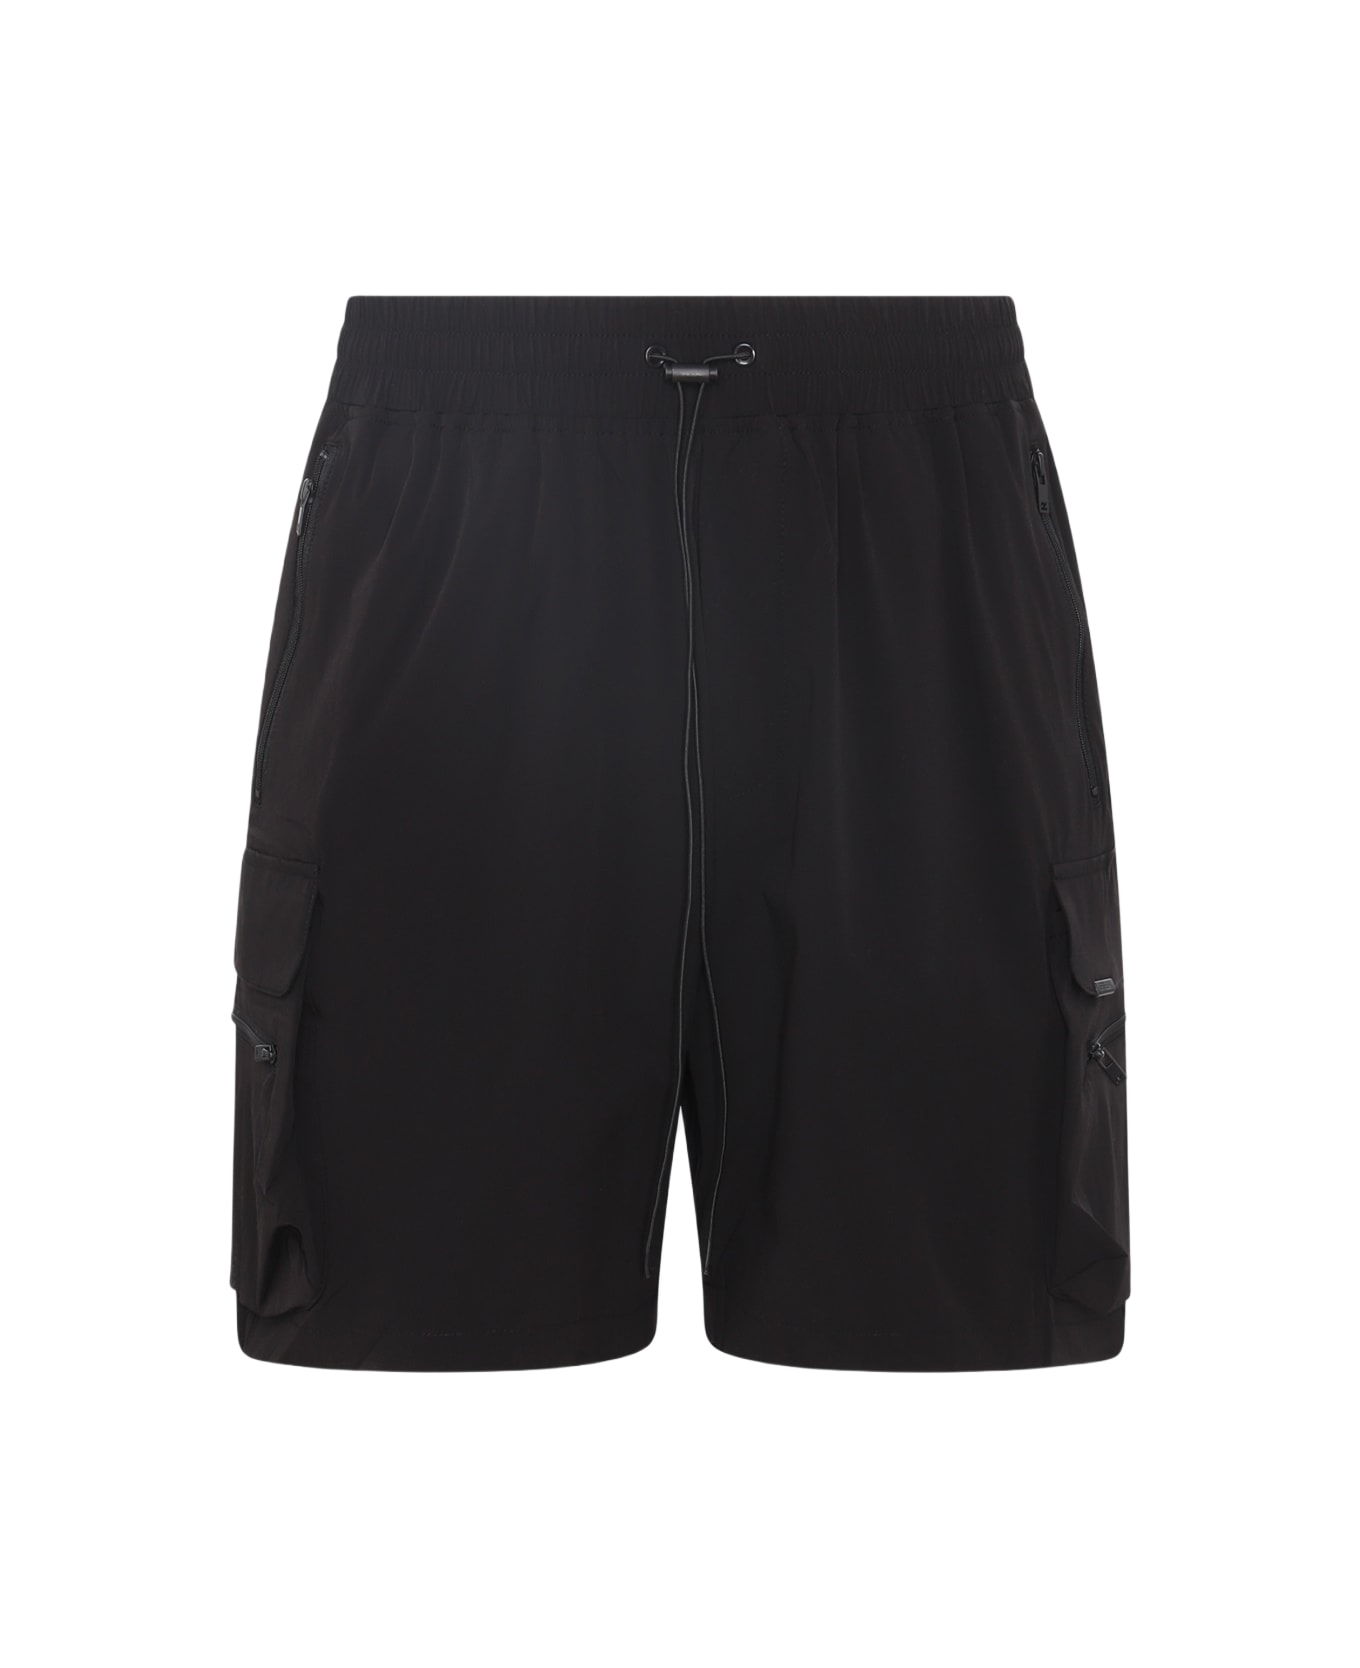 REPRESENT Black Nylon Shorts - Black